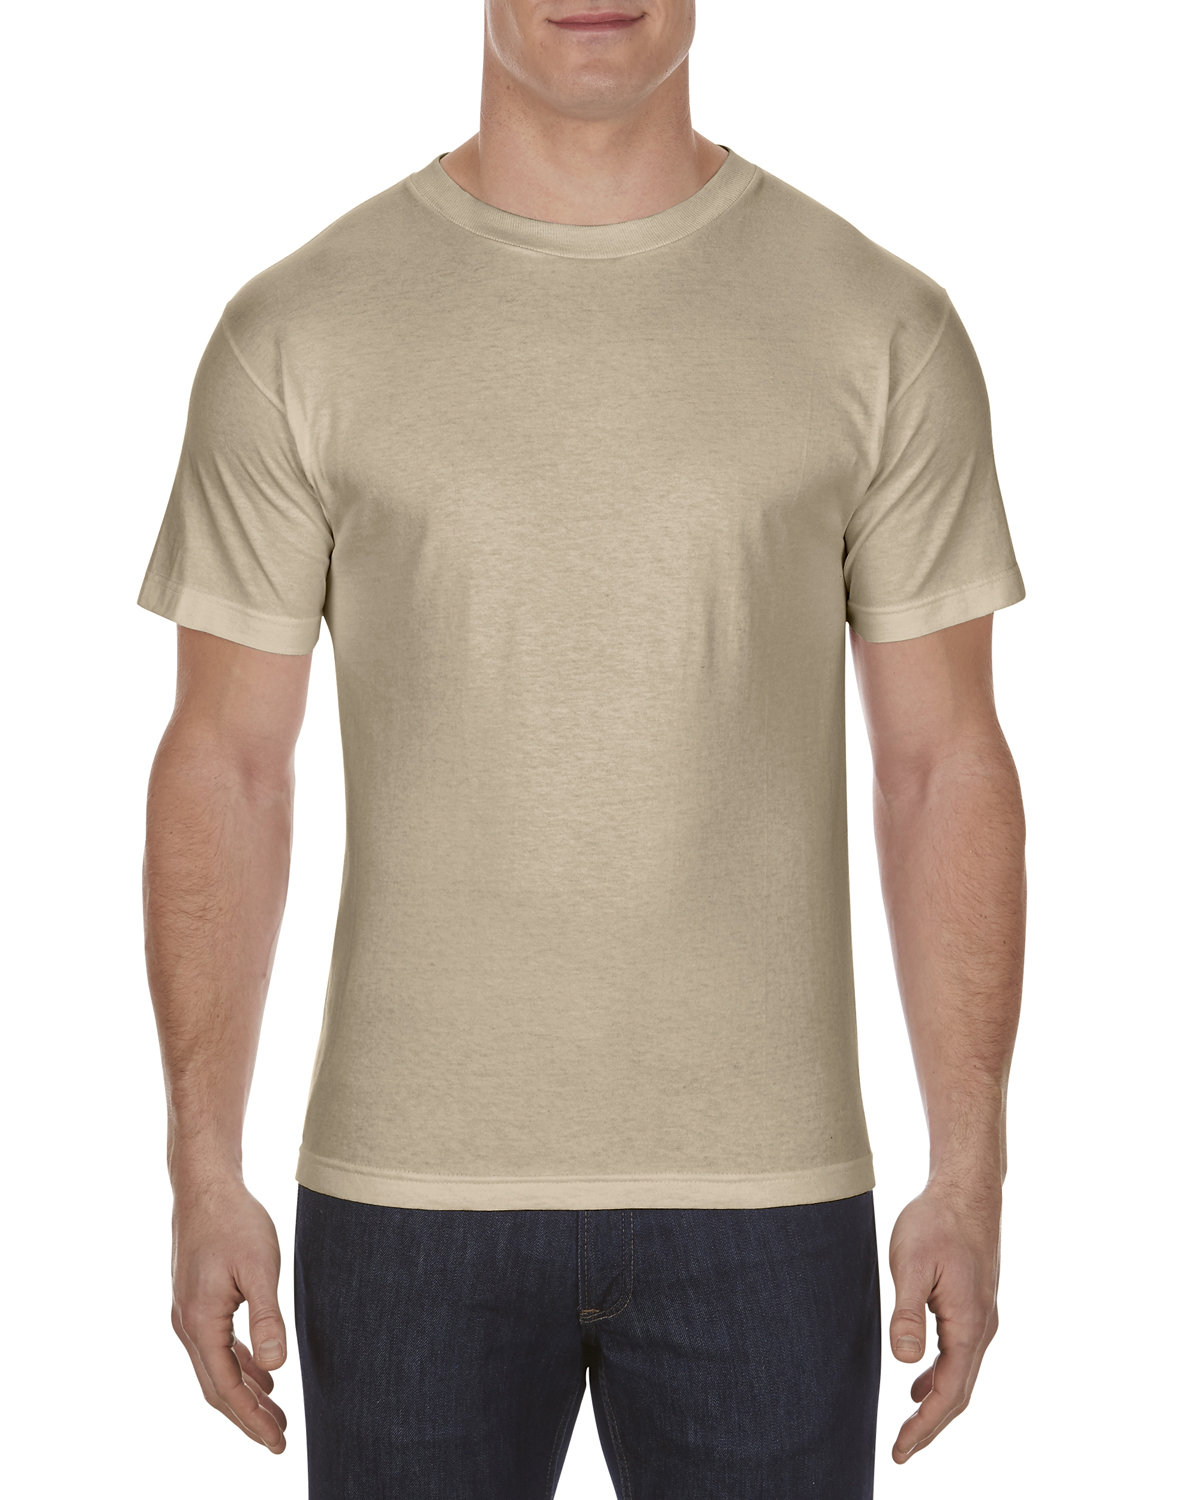 American Apparel Unisex Heavyweight Cotton T-Shirt sand 